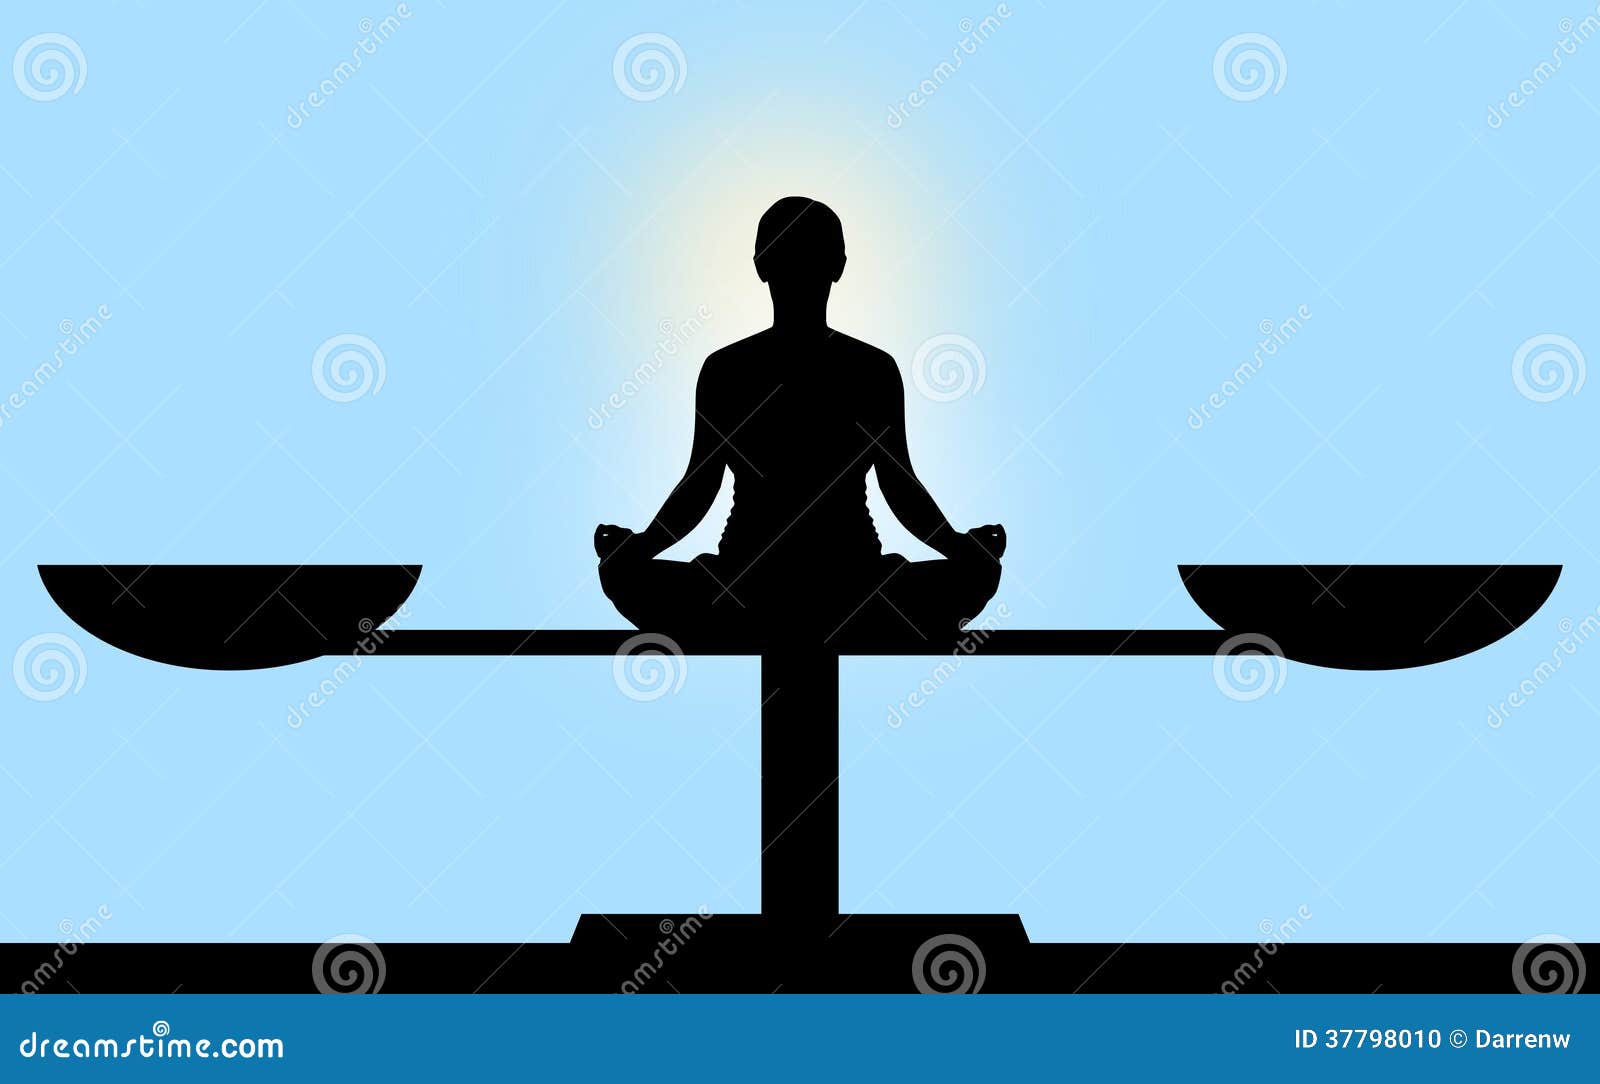 Balance Meditation Stock Illustration. Illustration Of Sitting - 37798010